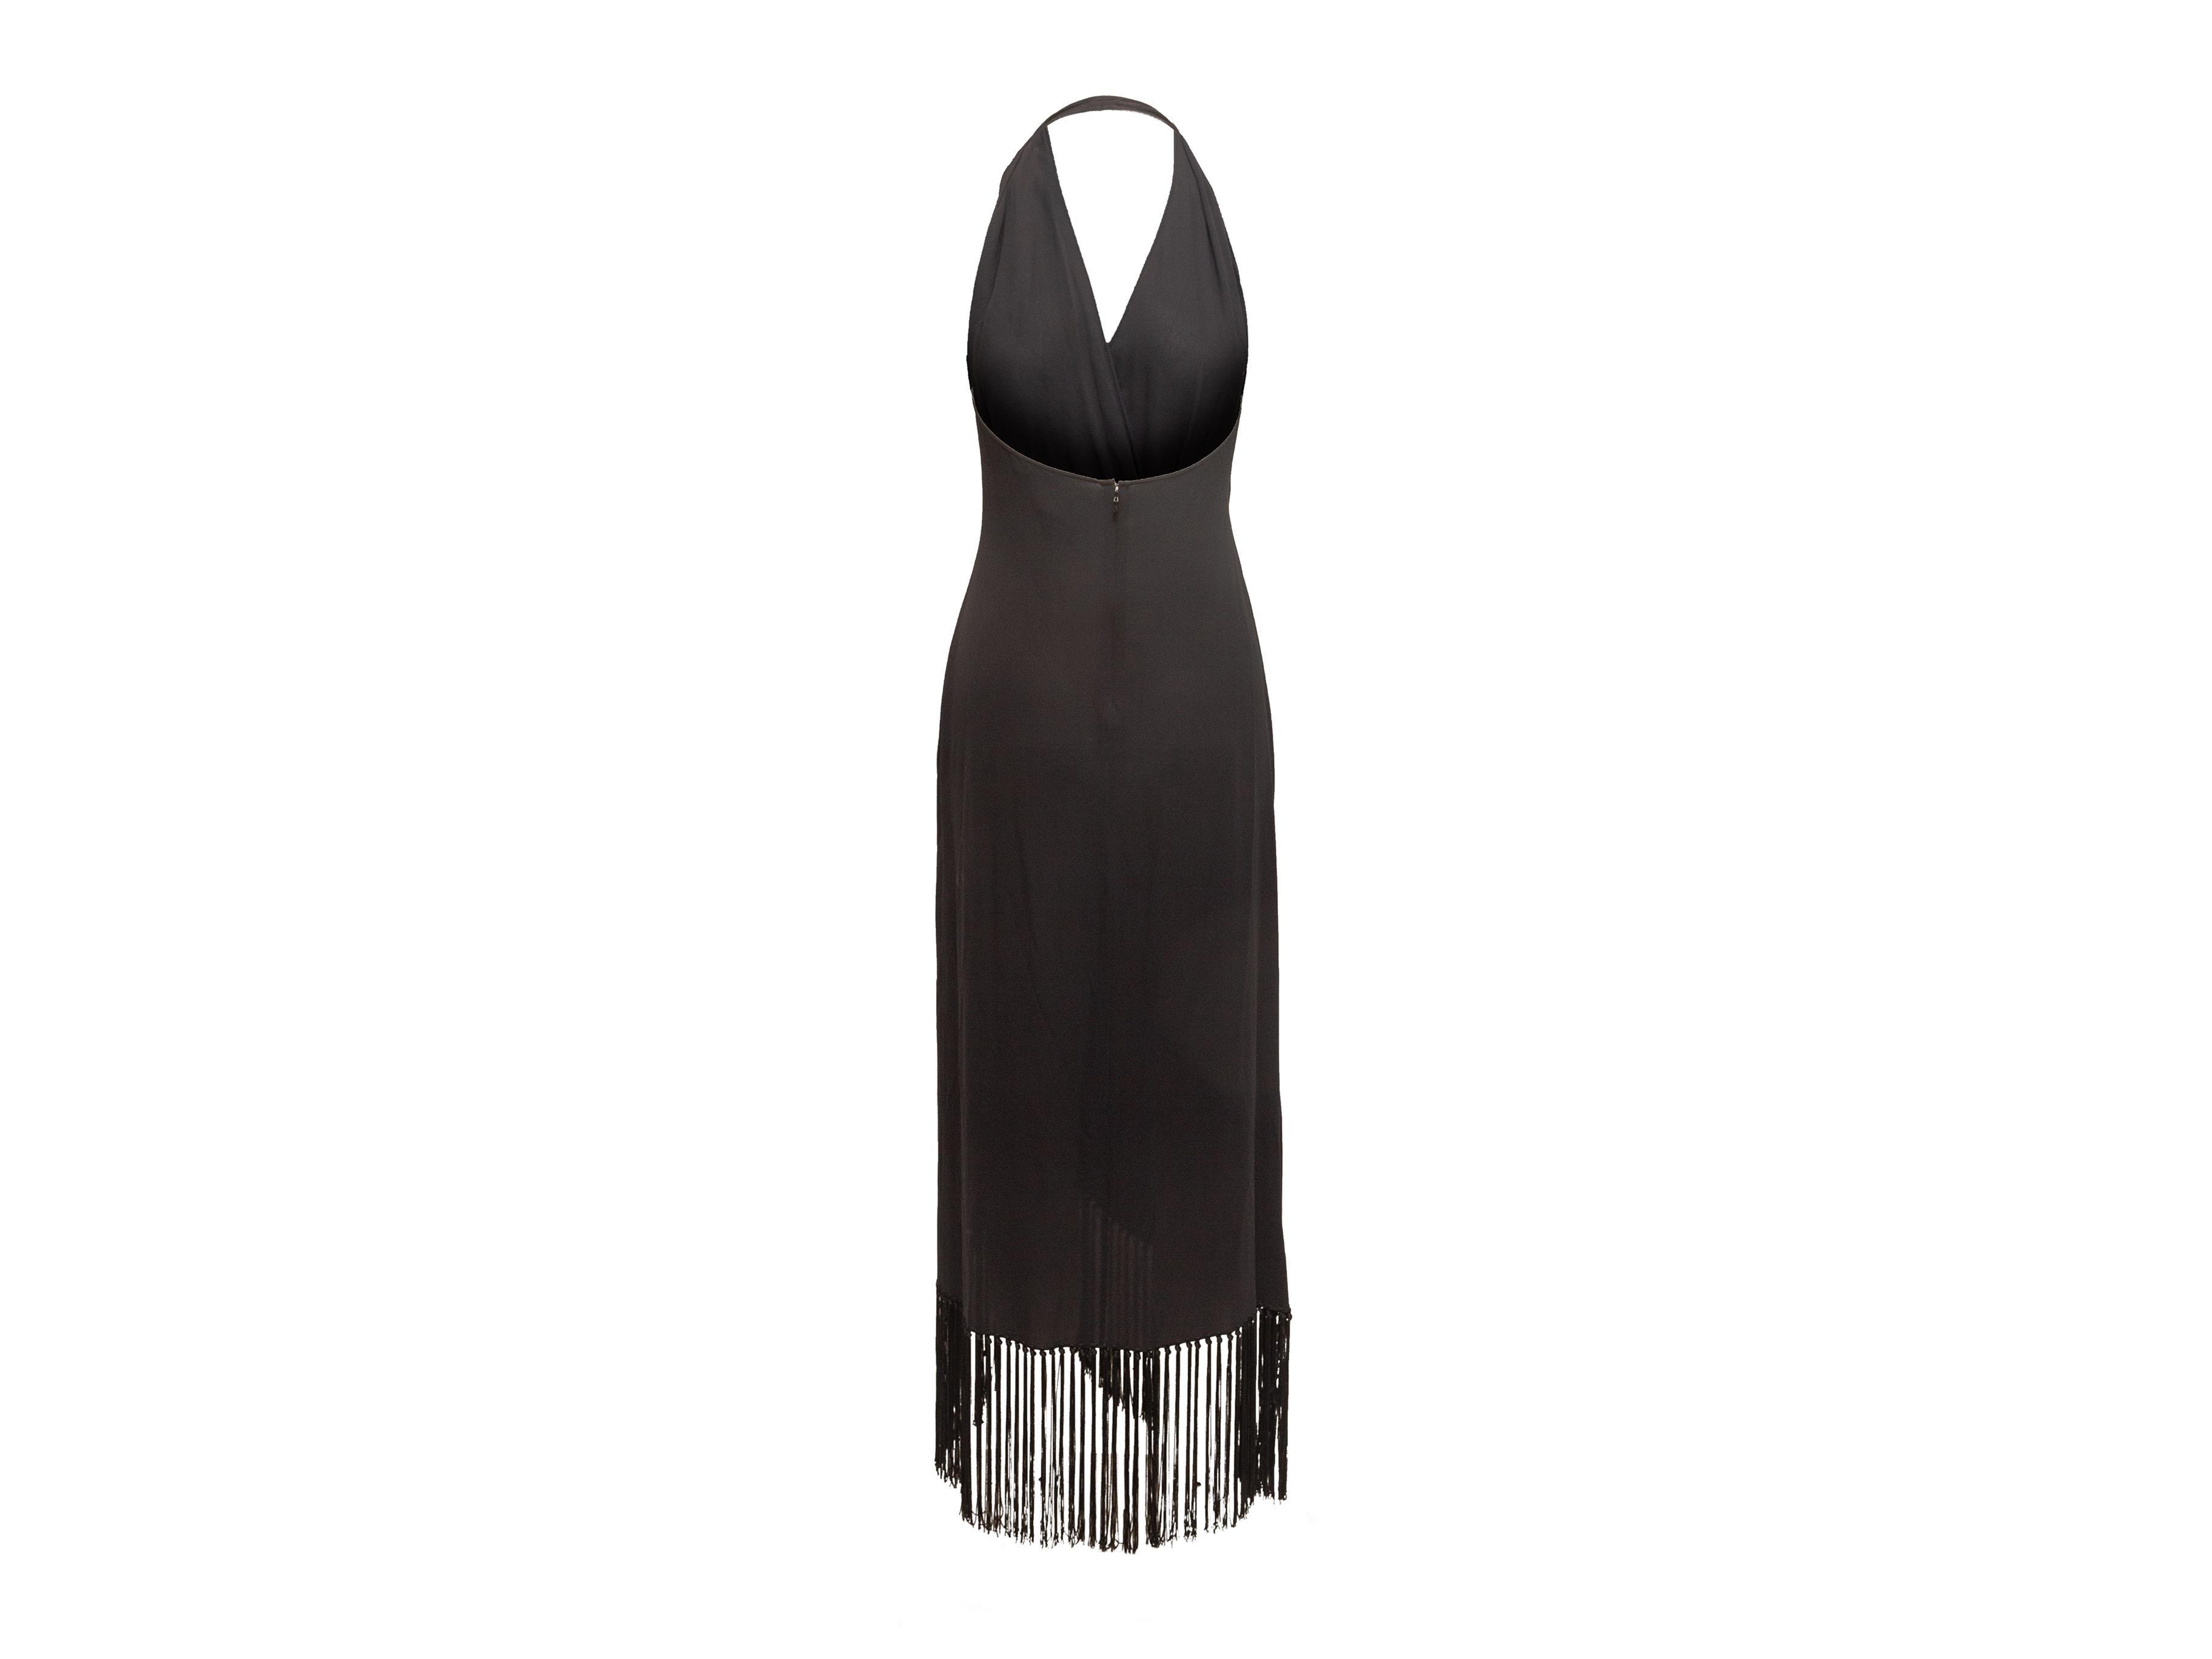 Product details: Black halter maxi dress by Celine. Surplice neckline featuring draping. Fringe trim at hem. Zip closure at back. 24